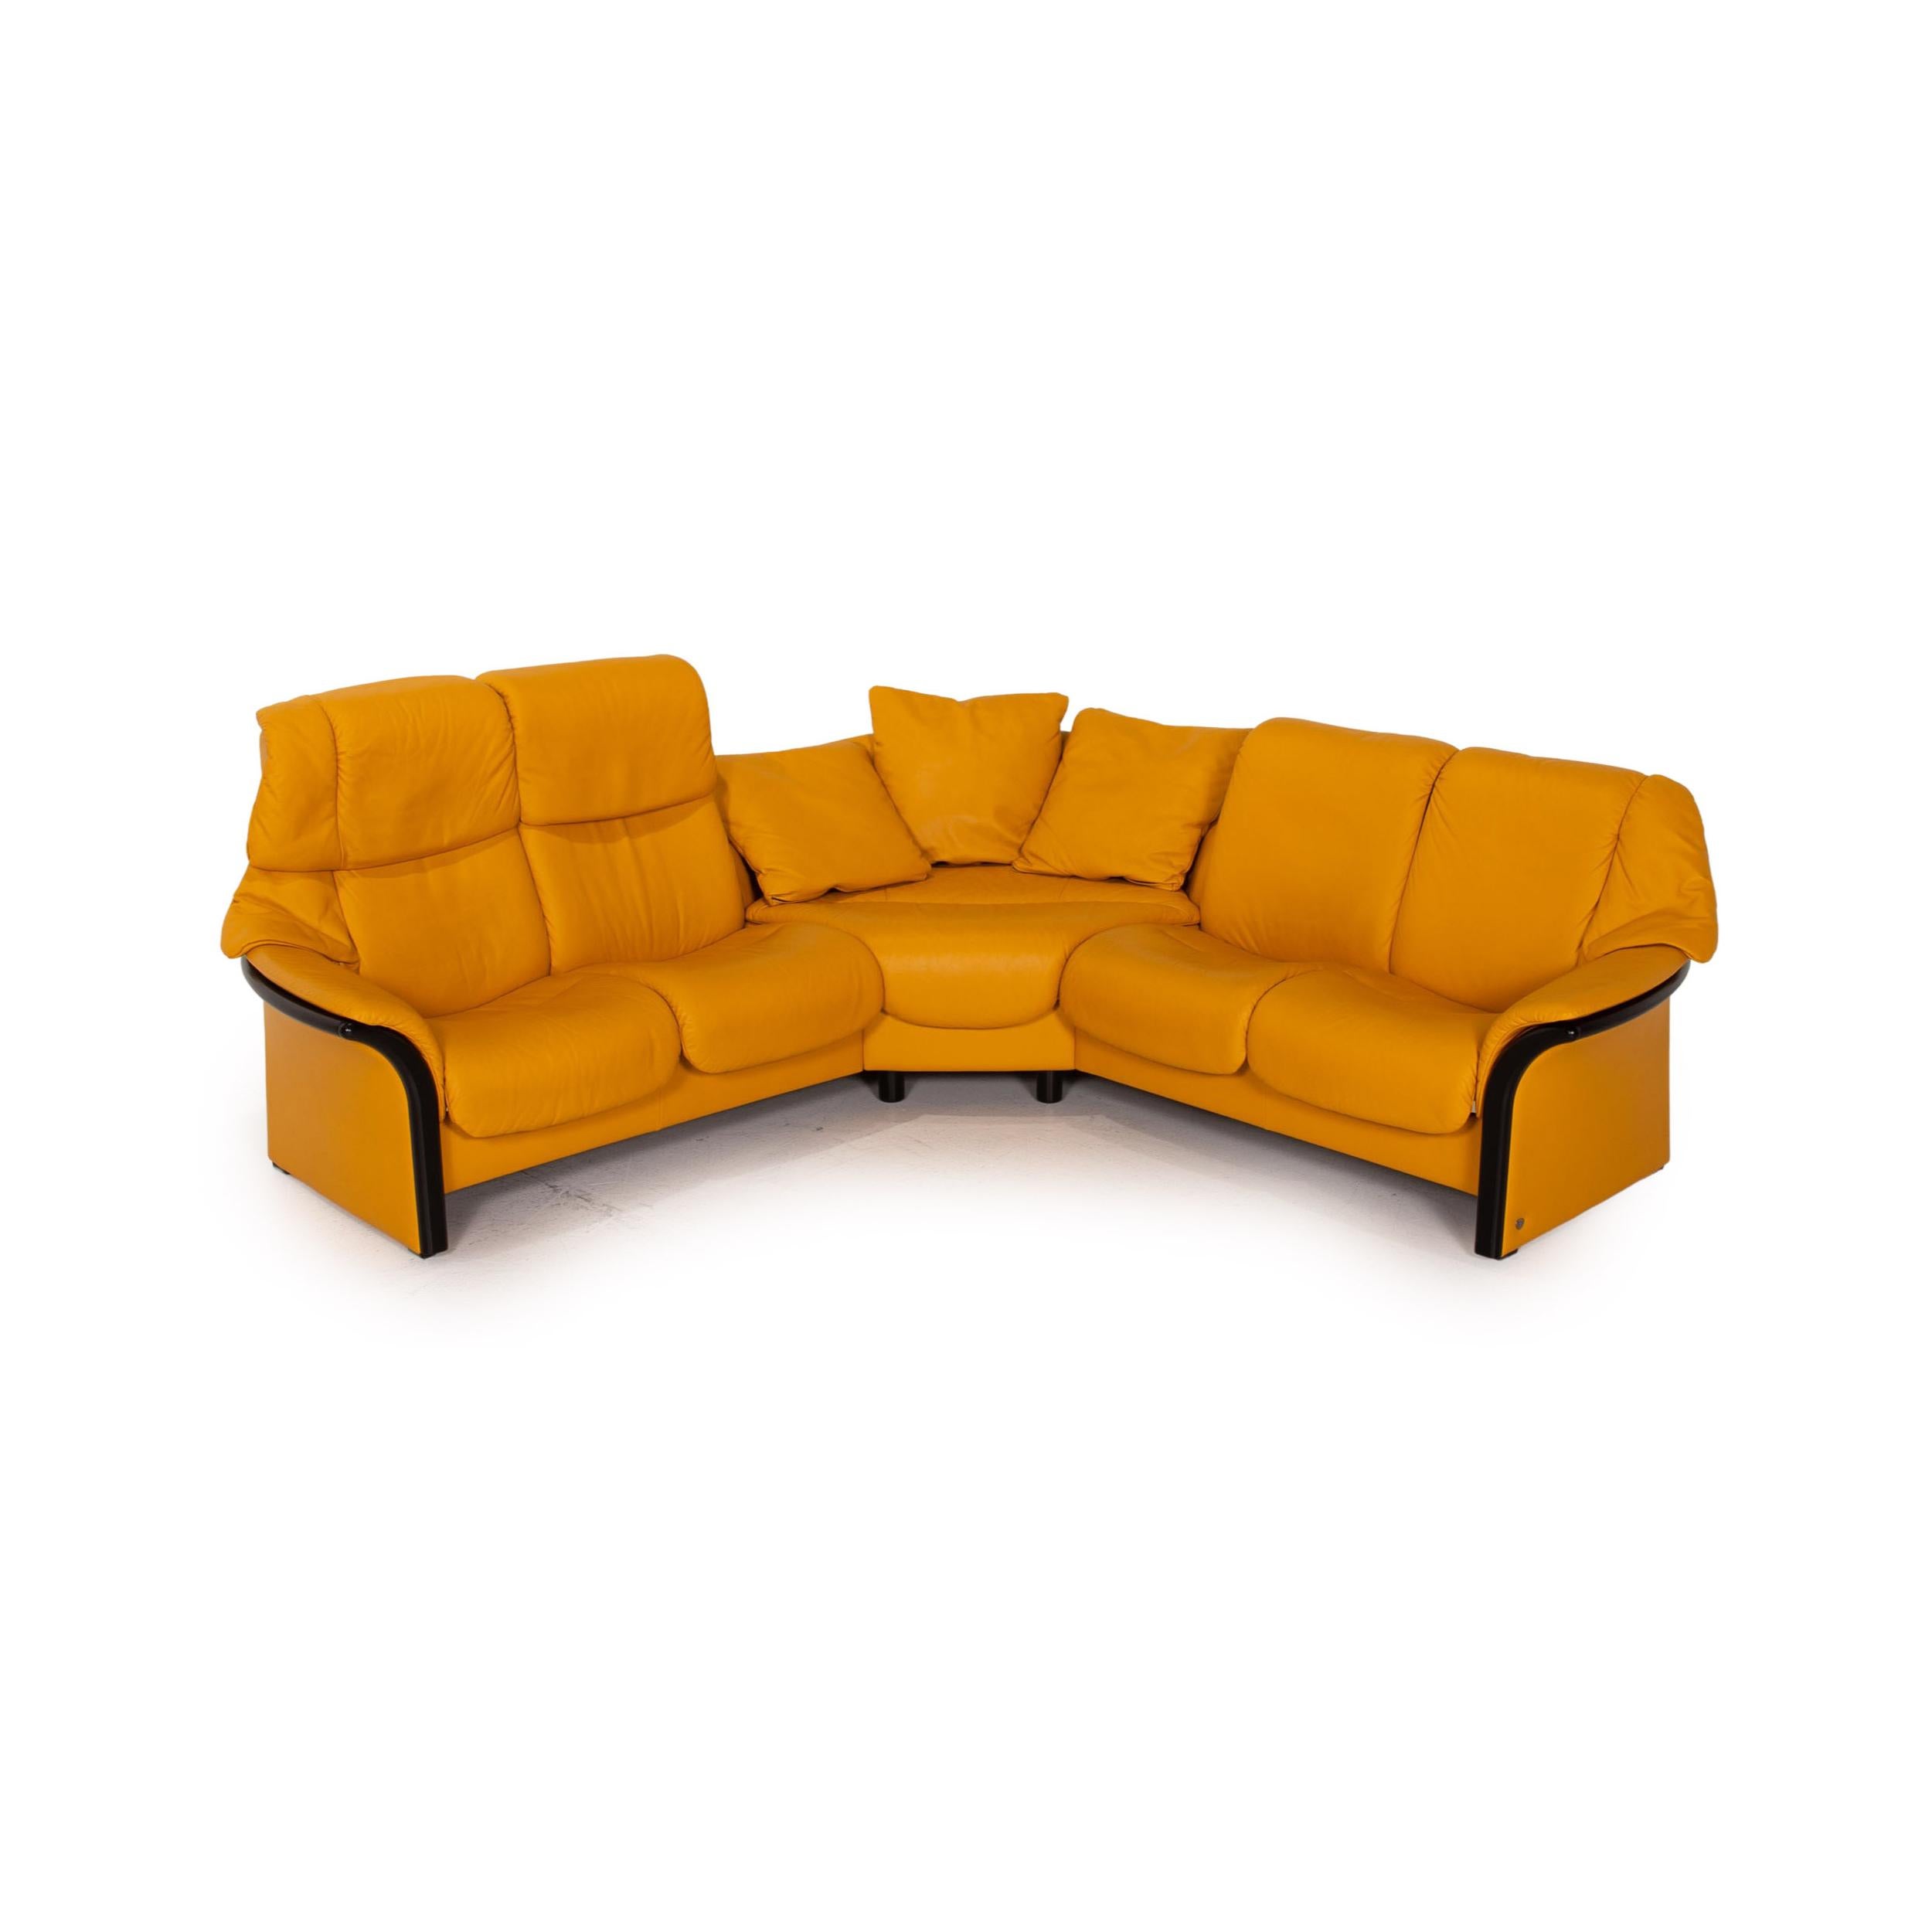 Stressless Eldorado Leather Corner Sofa Yellow Relax Function Sofa Couch 2